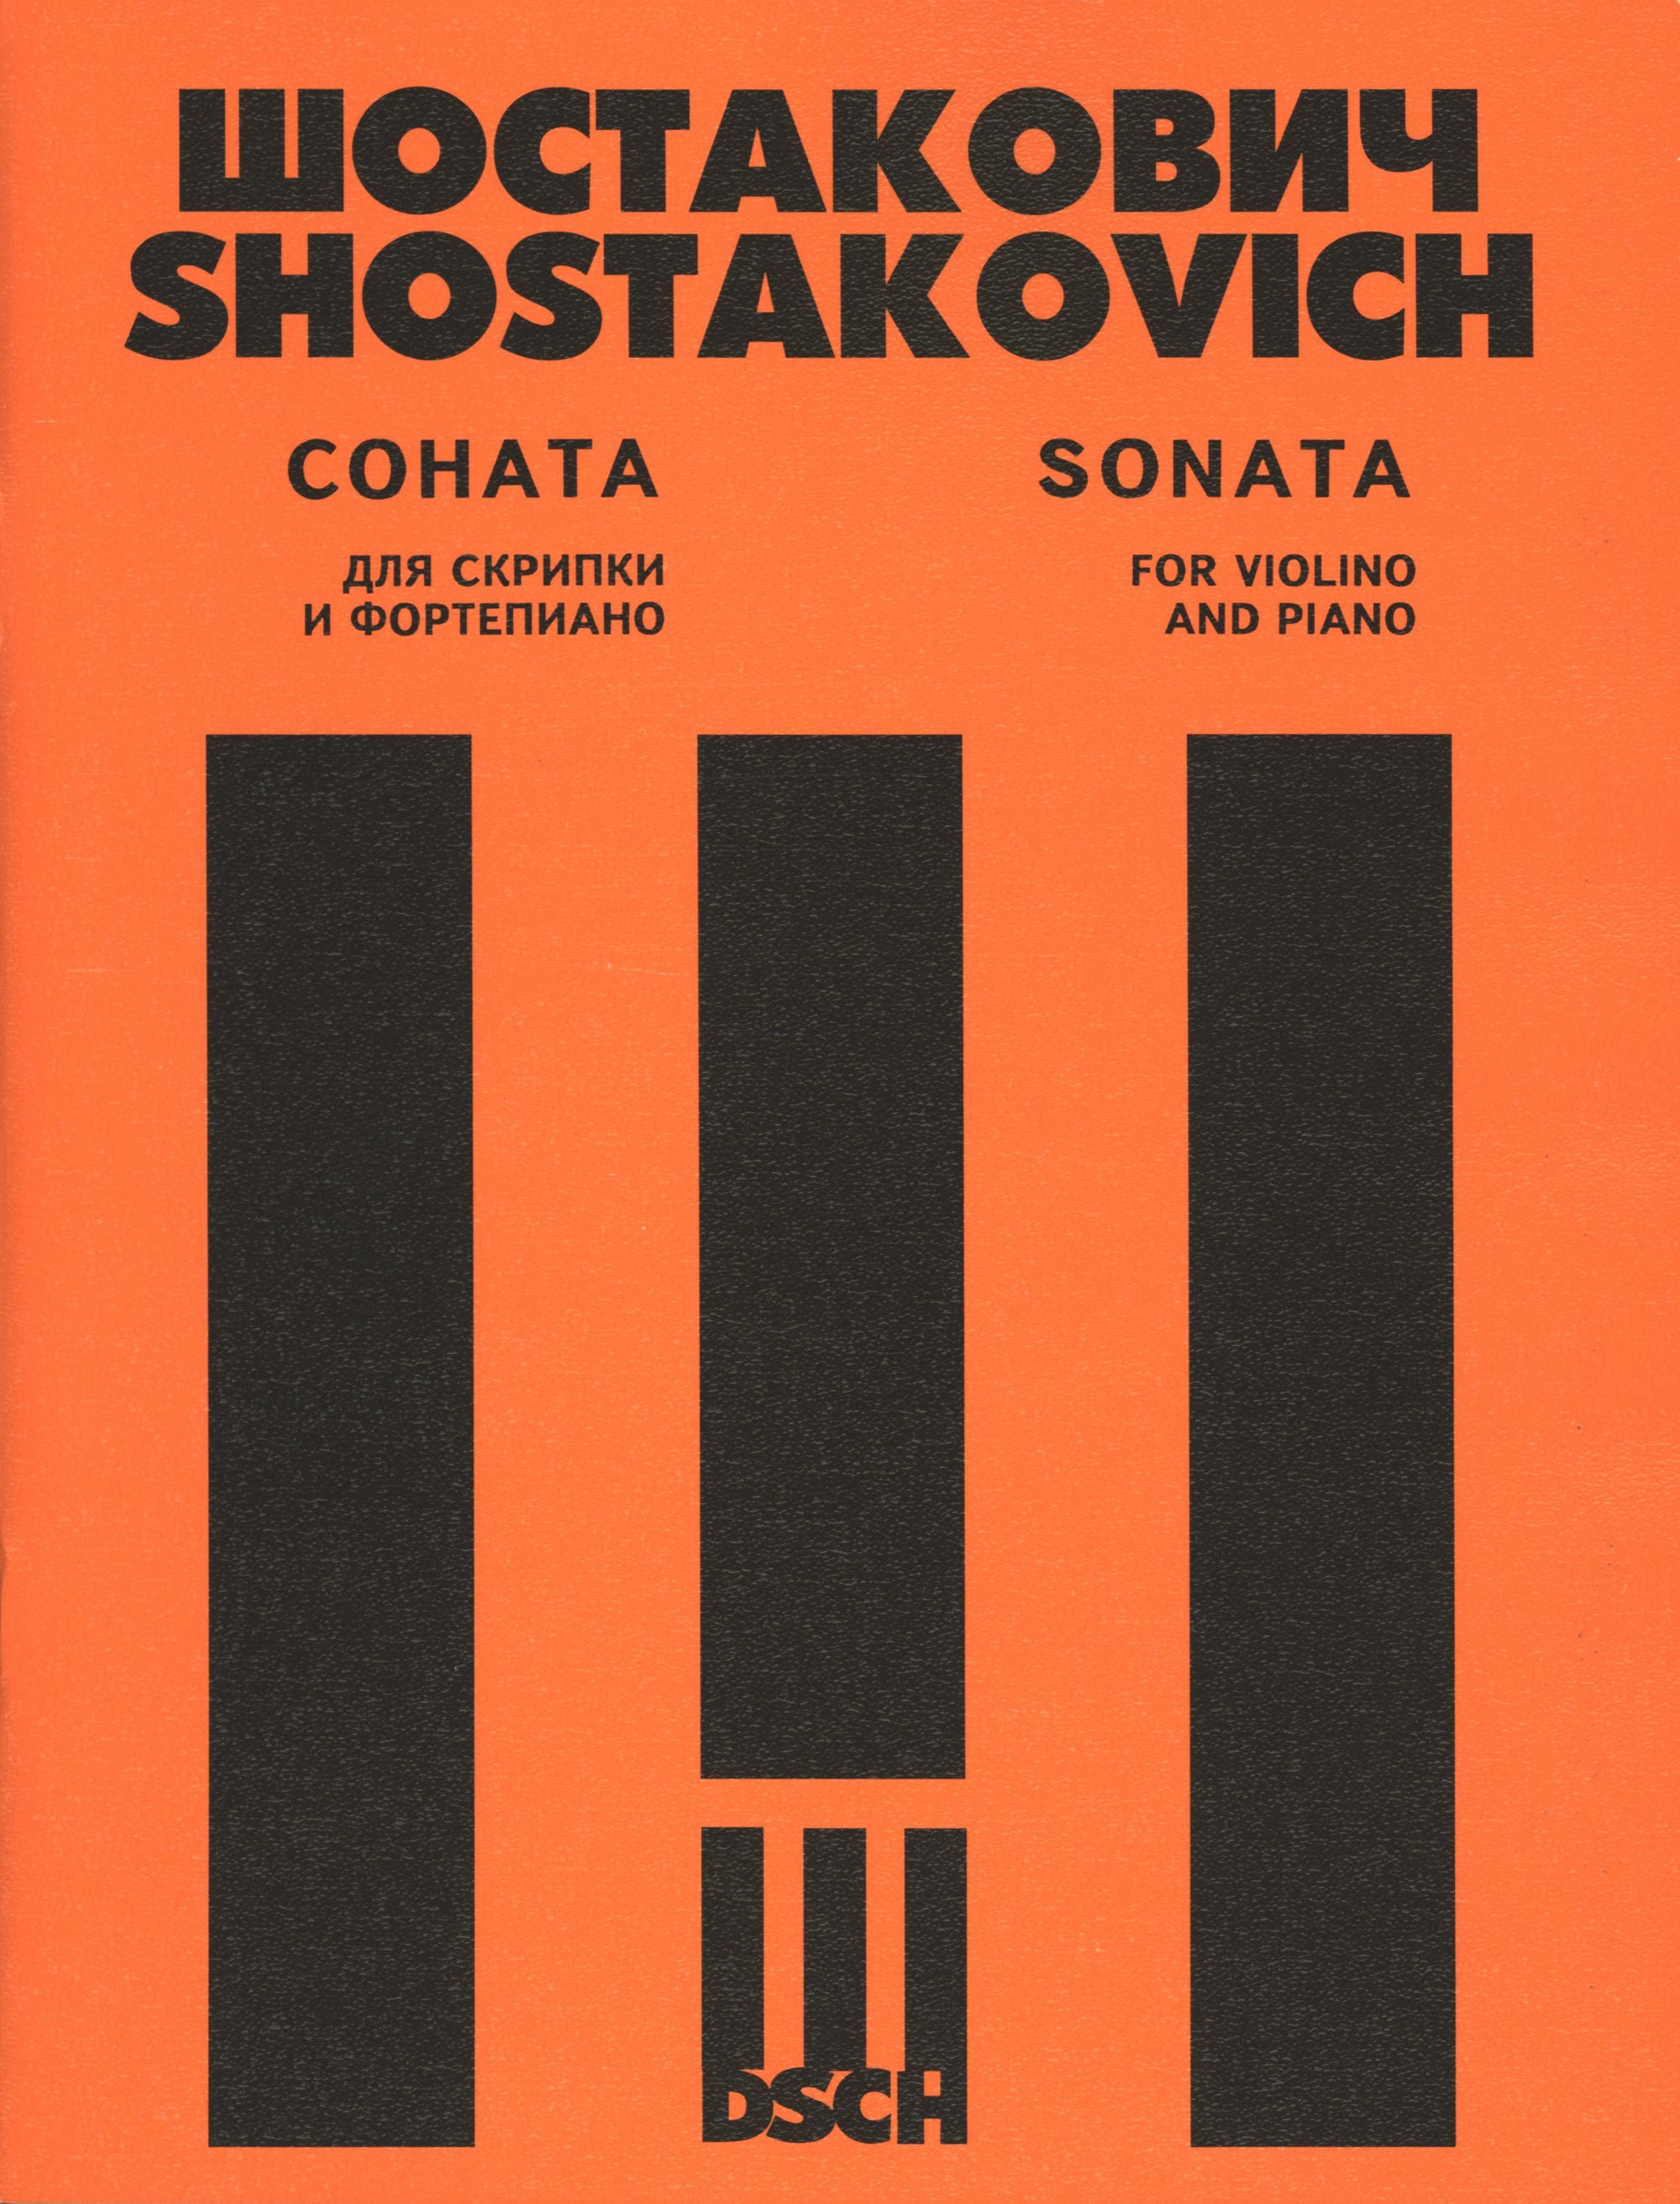 Shostakovich: Violin Sonata, Op. 134